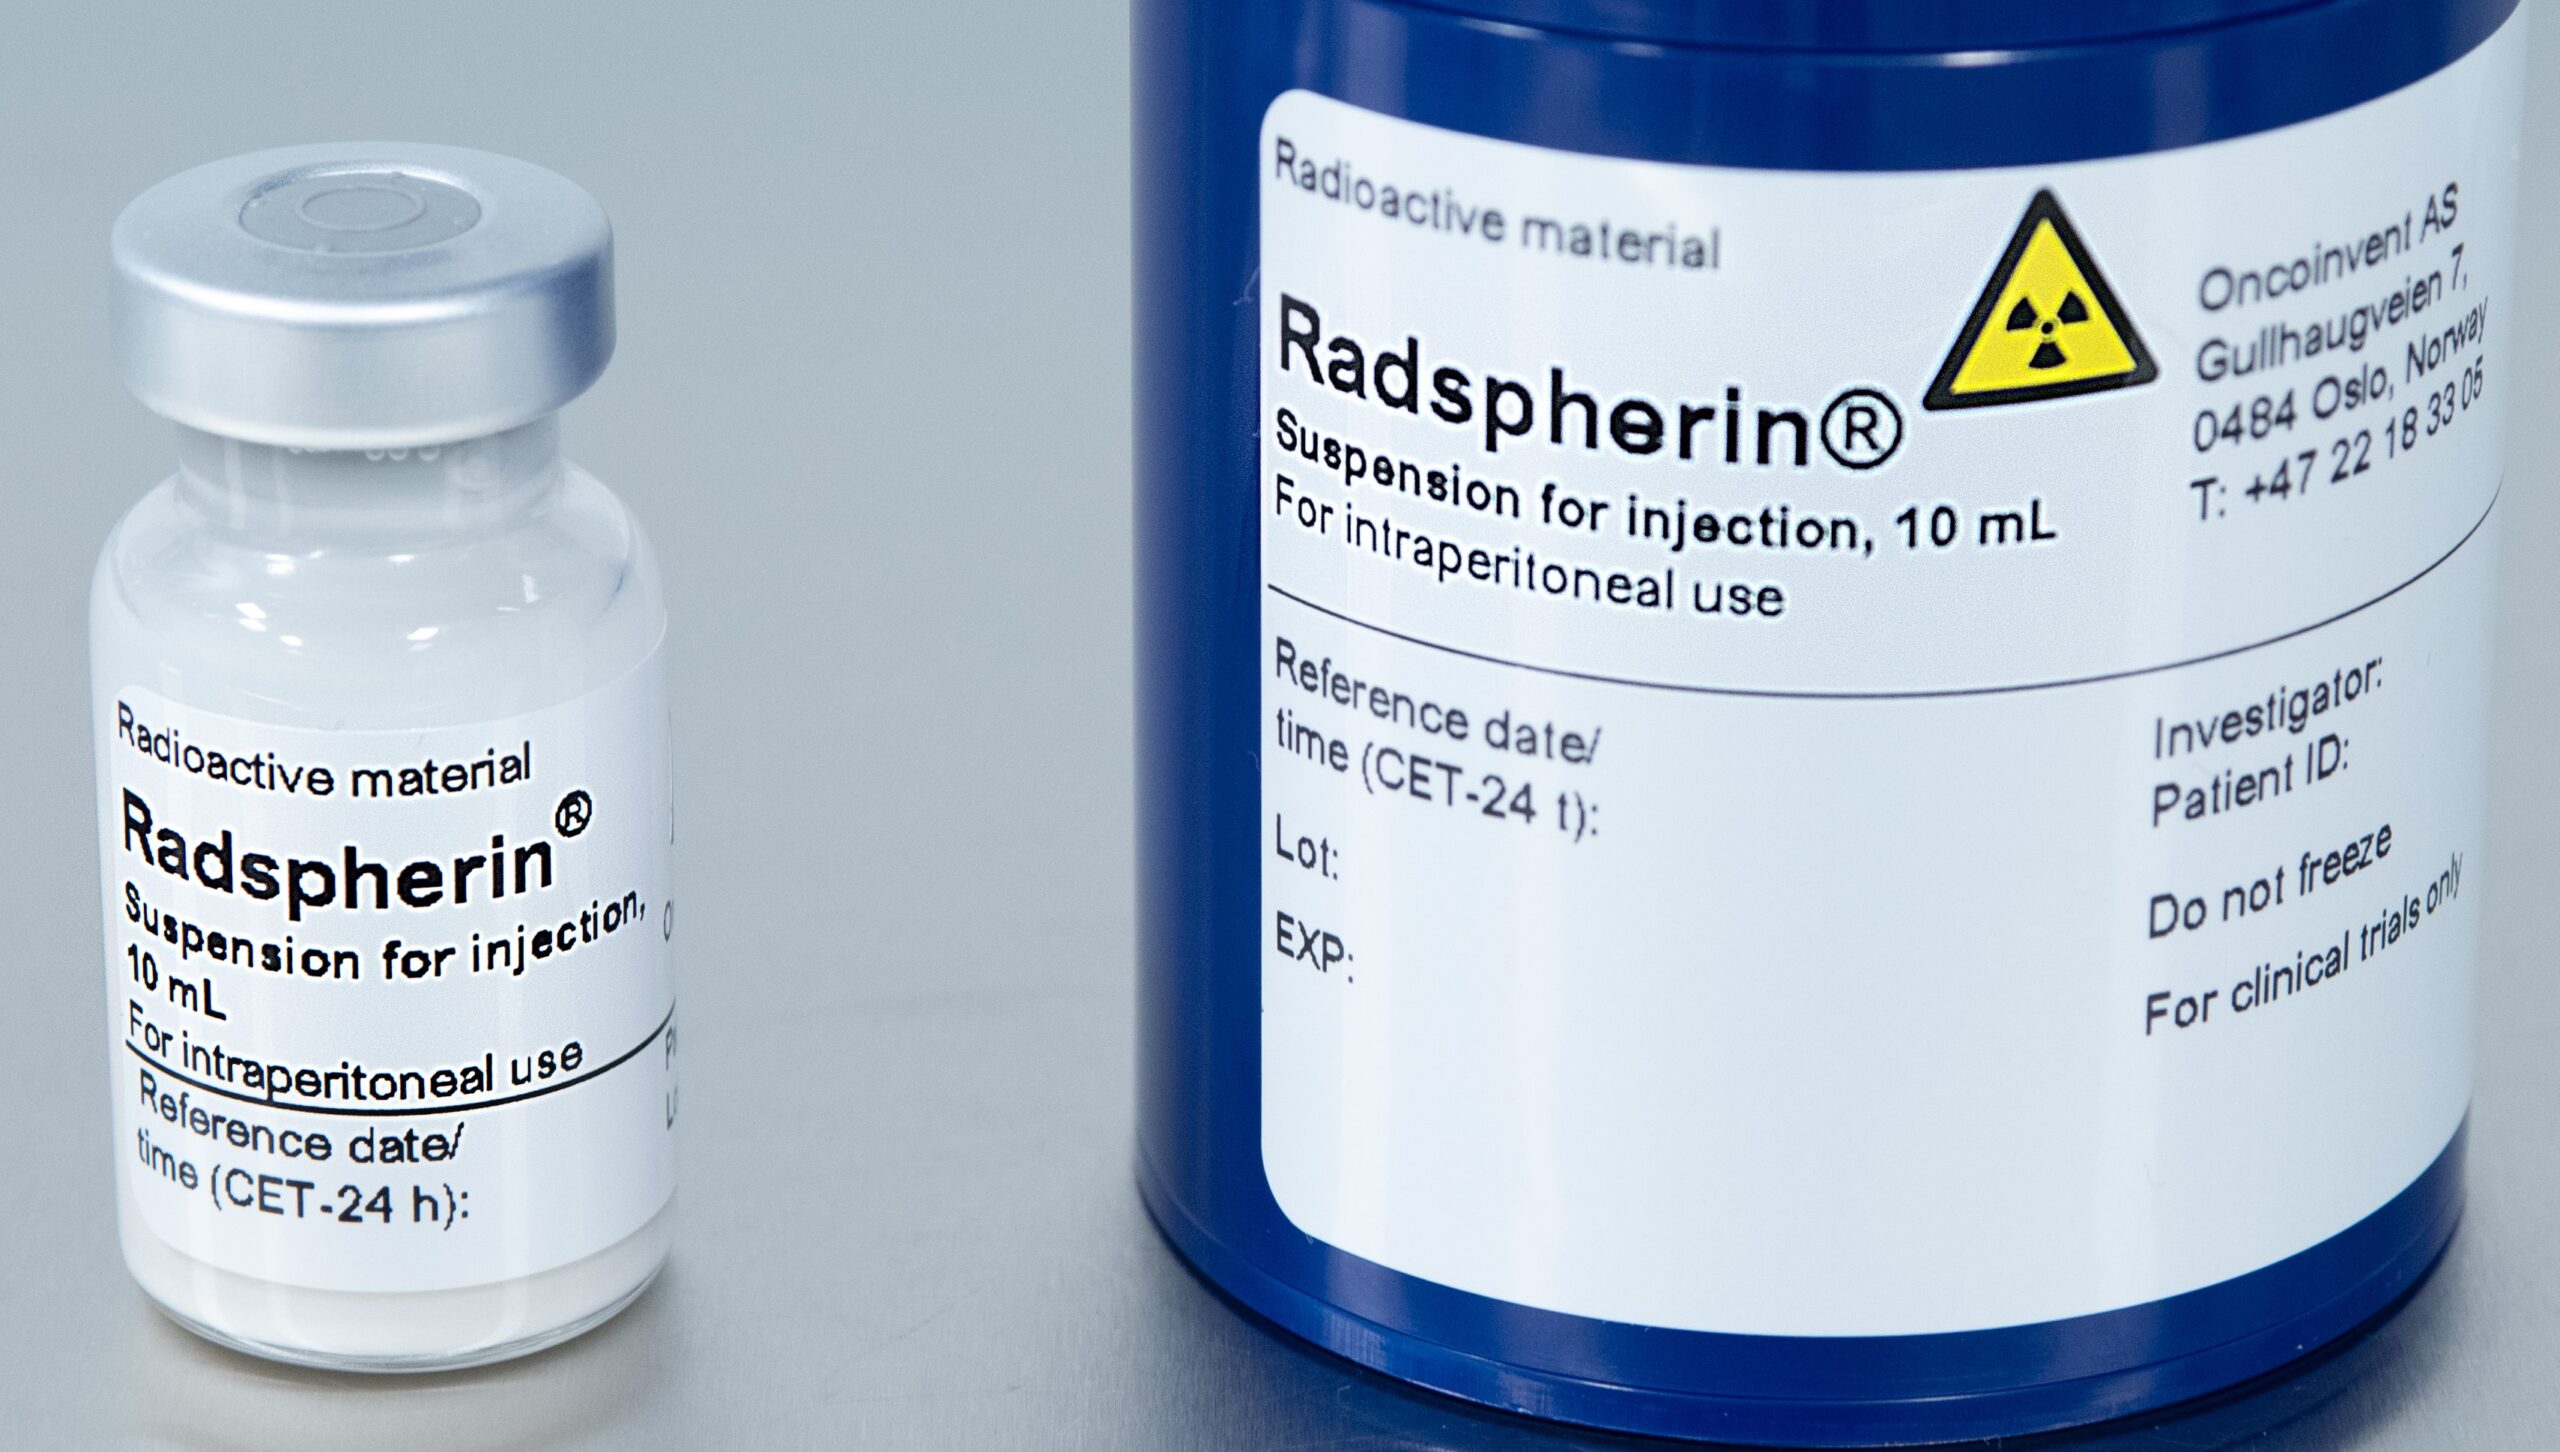 Oncoinvent Receives FDA Fast Track Designation for  Radspherin®